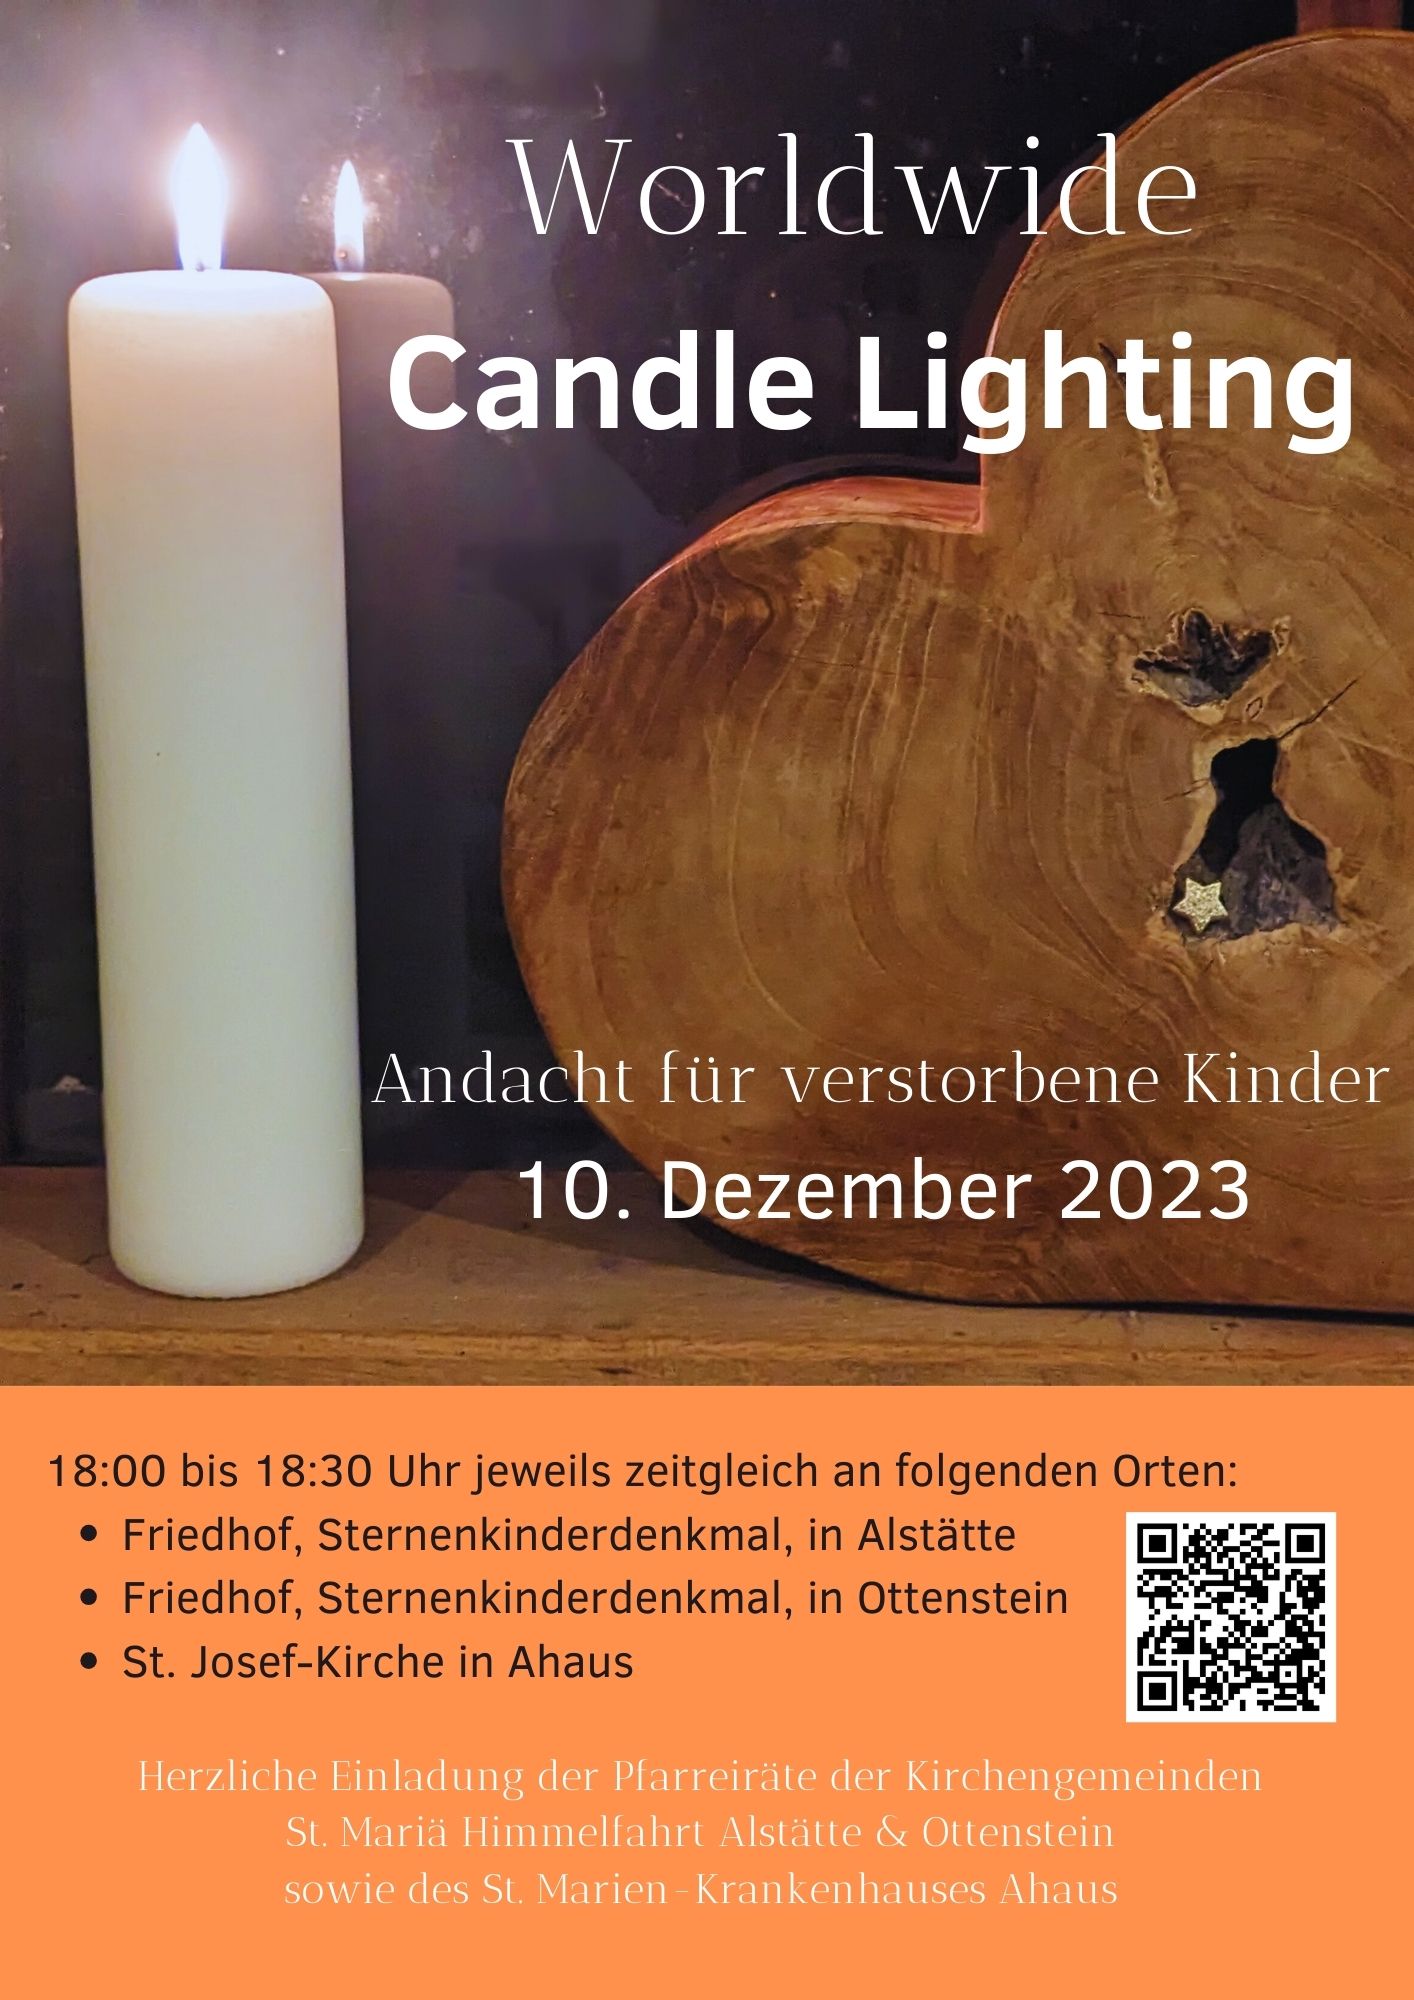 Einladung_Pfarreiraete_Candle_Lighting_2023.jpg